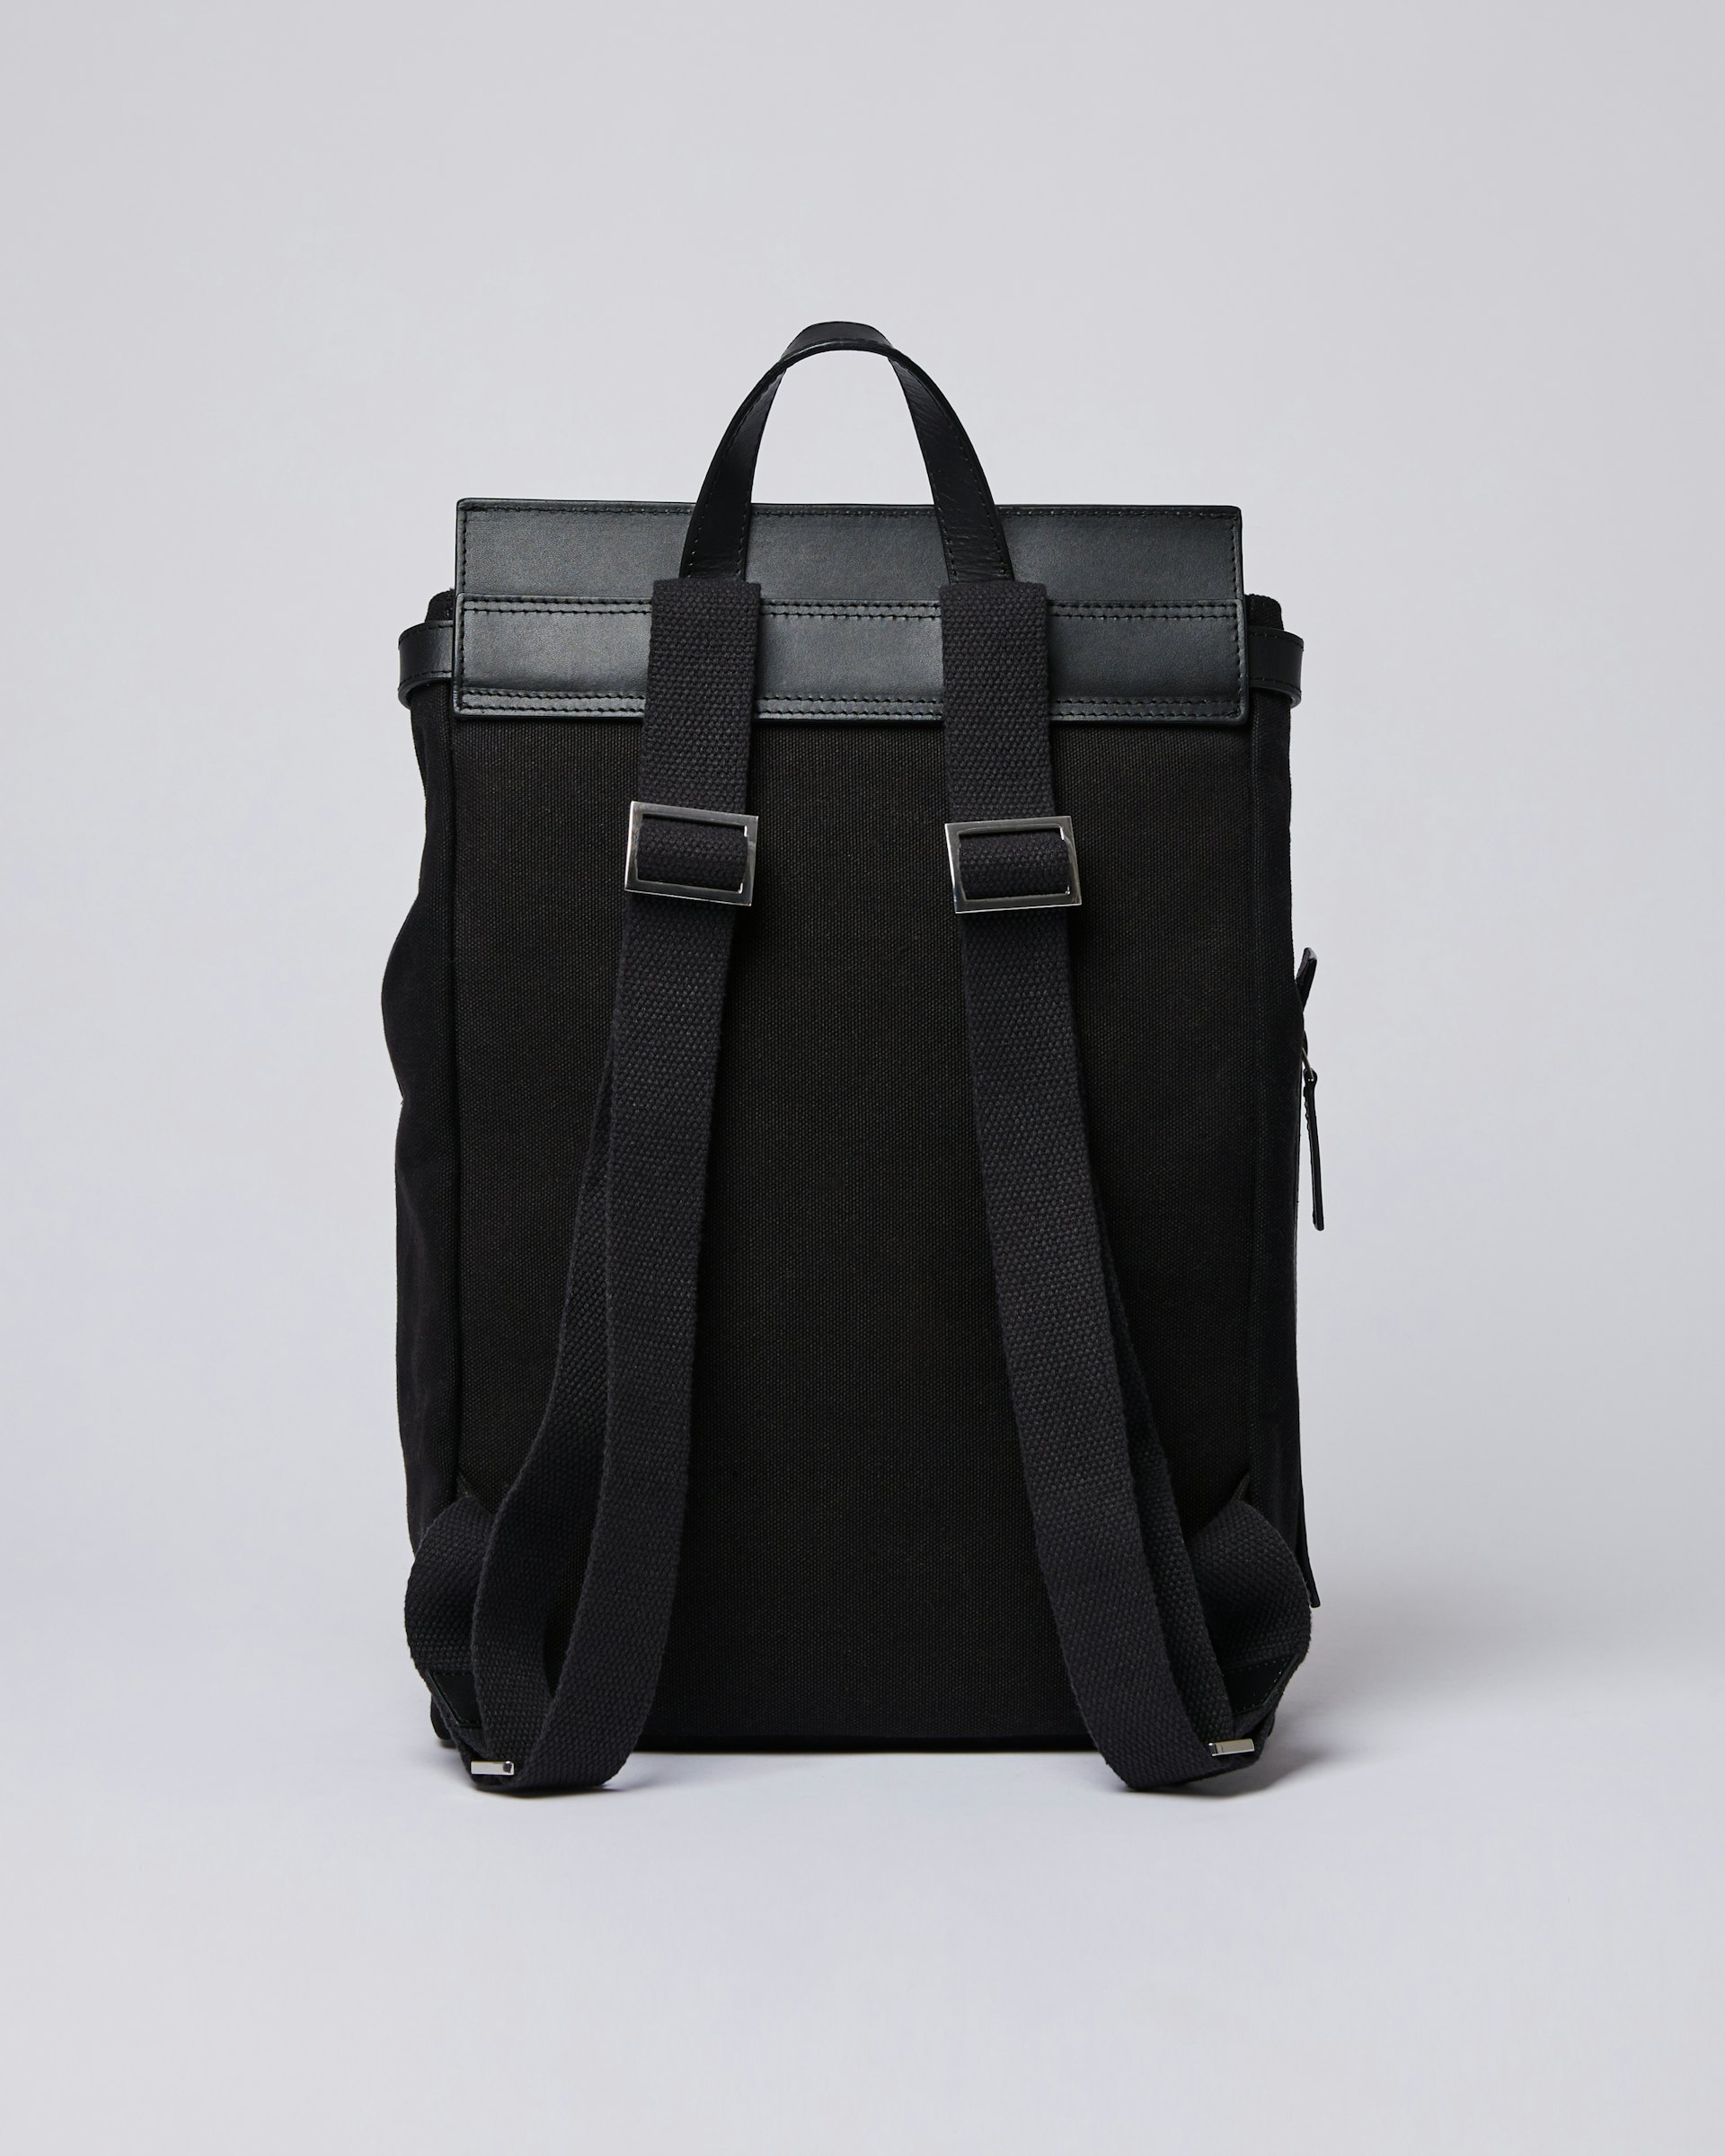 Alva Metal Hook belongs to the category Backpacks and is in color black (3 of 6)